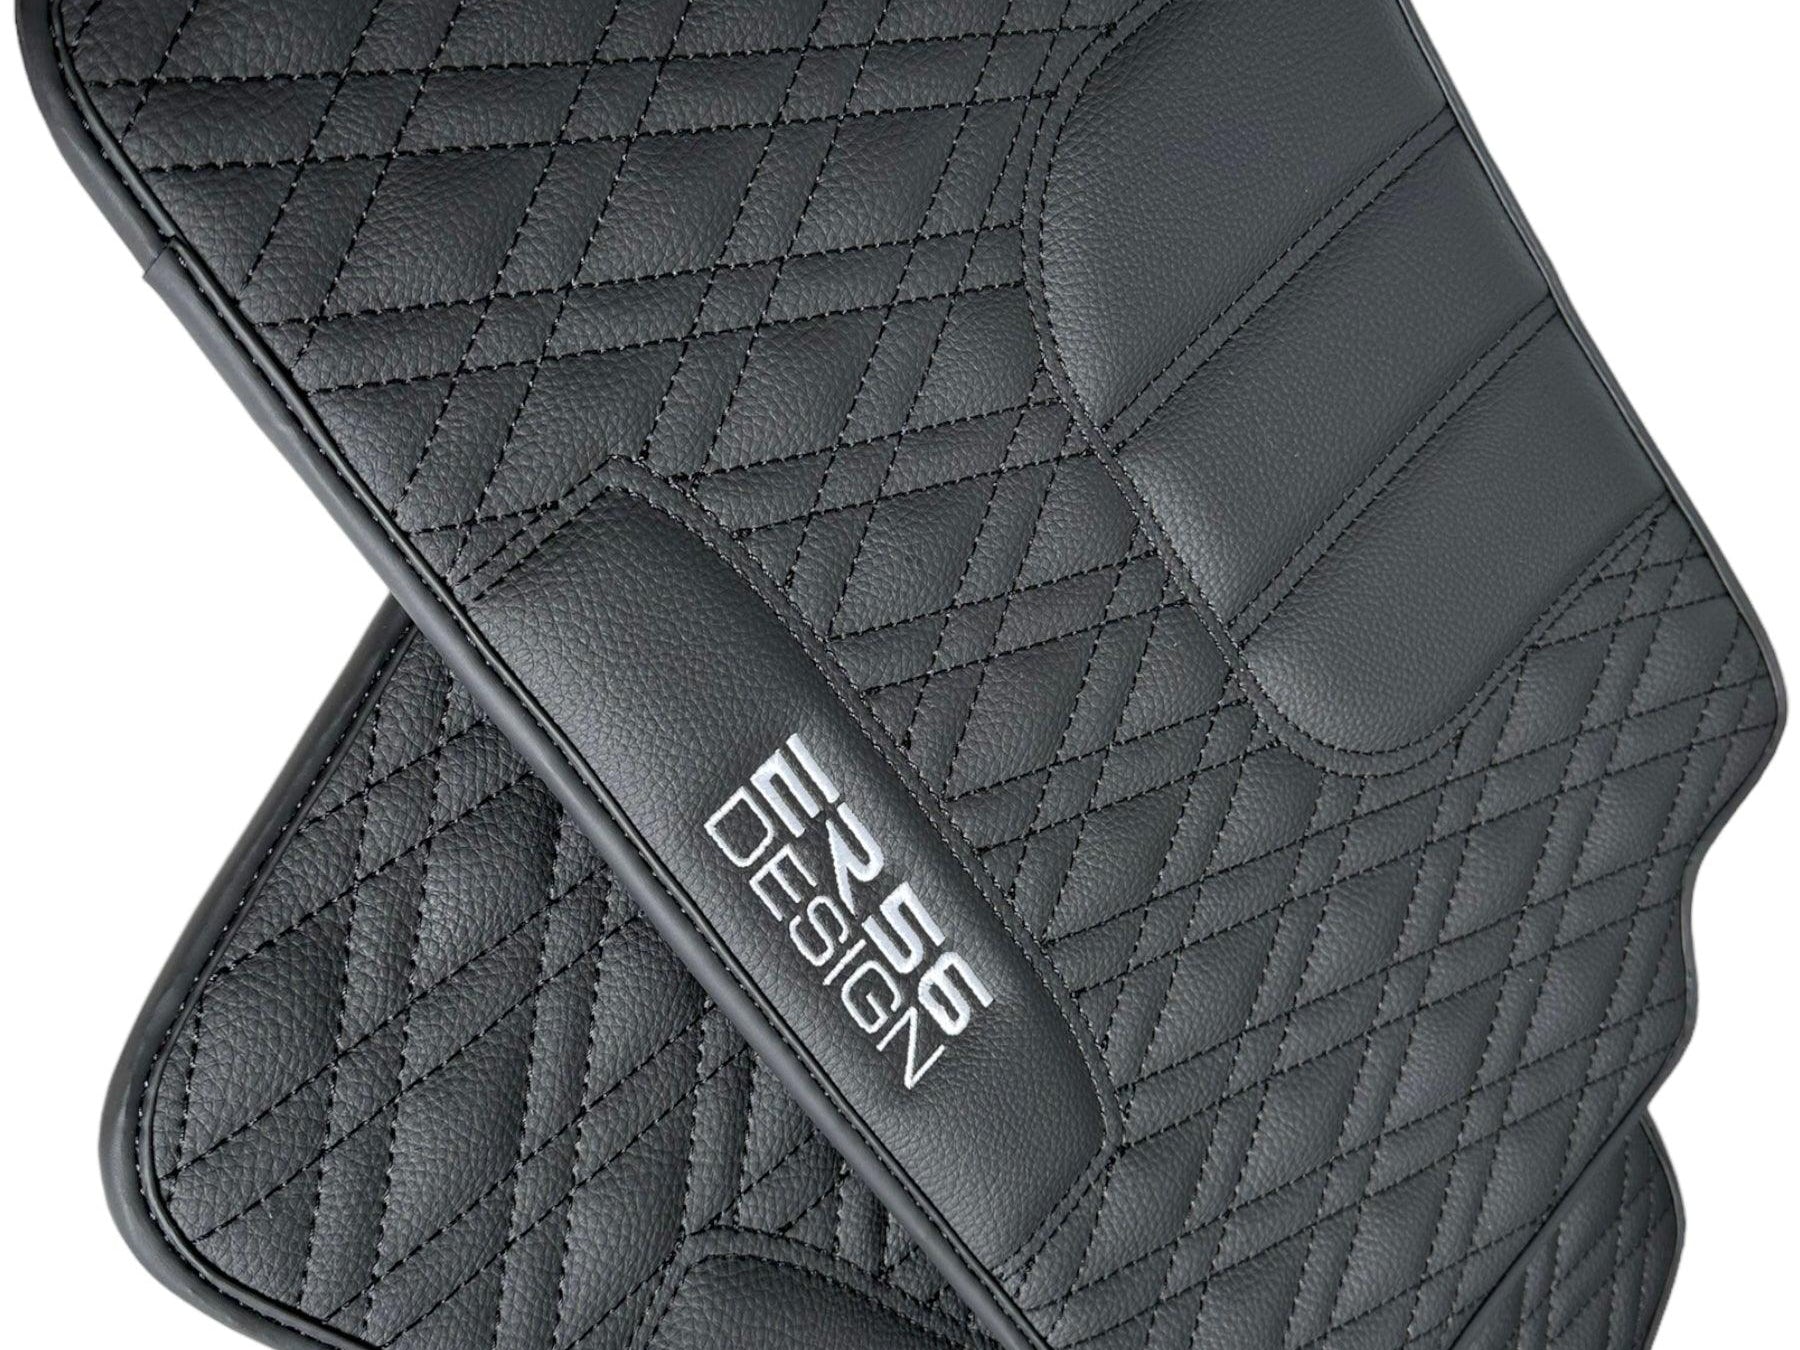 Floor Mats For BMW M5 E28 Black Leather Er56 Design - AutoWin